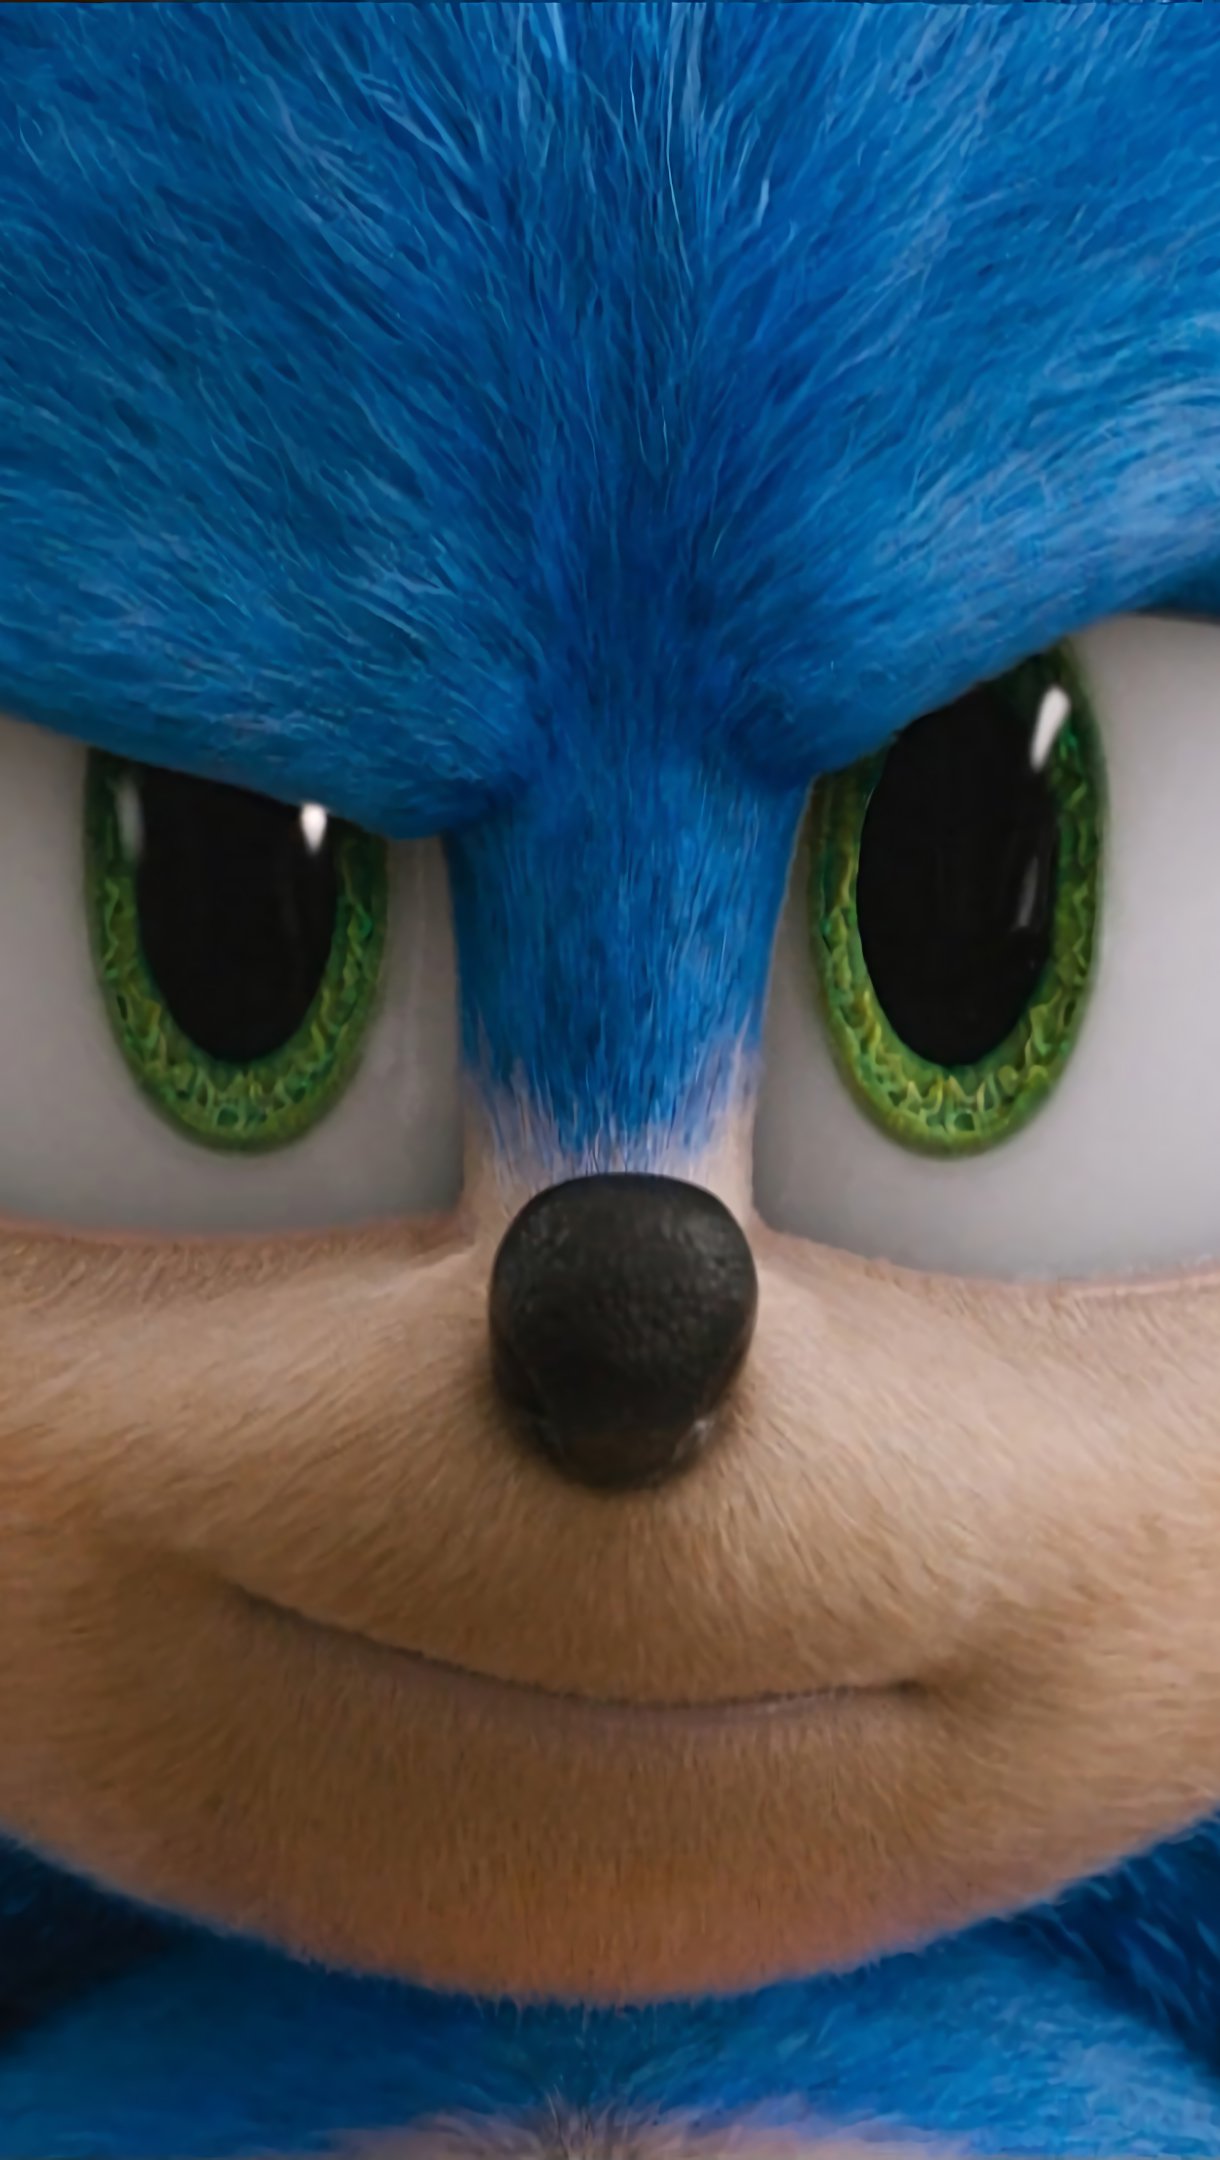 Sonic the Hedgehog Movie Wallpaper 4k Ultra HD